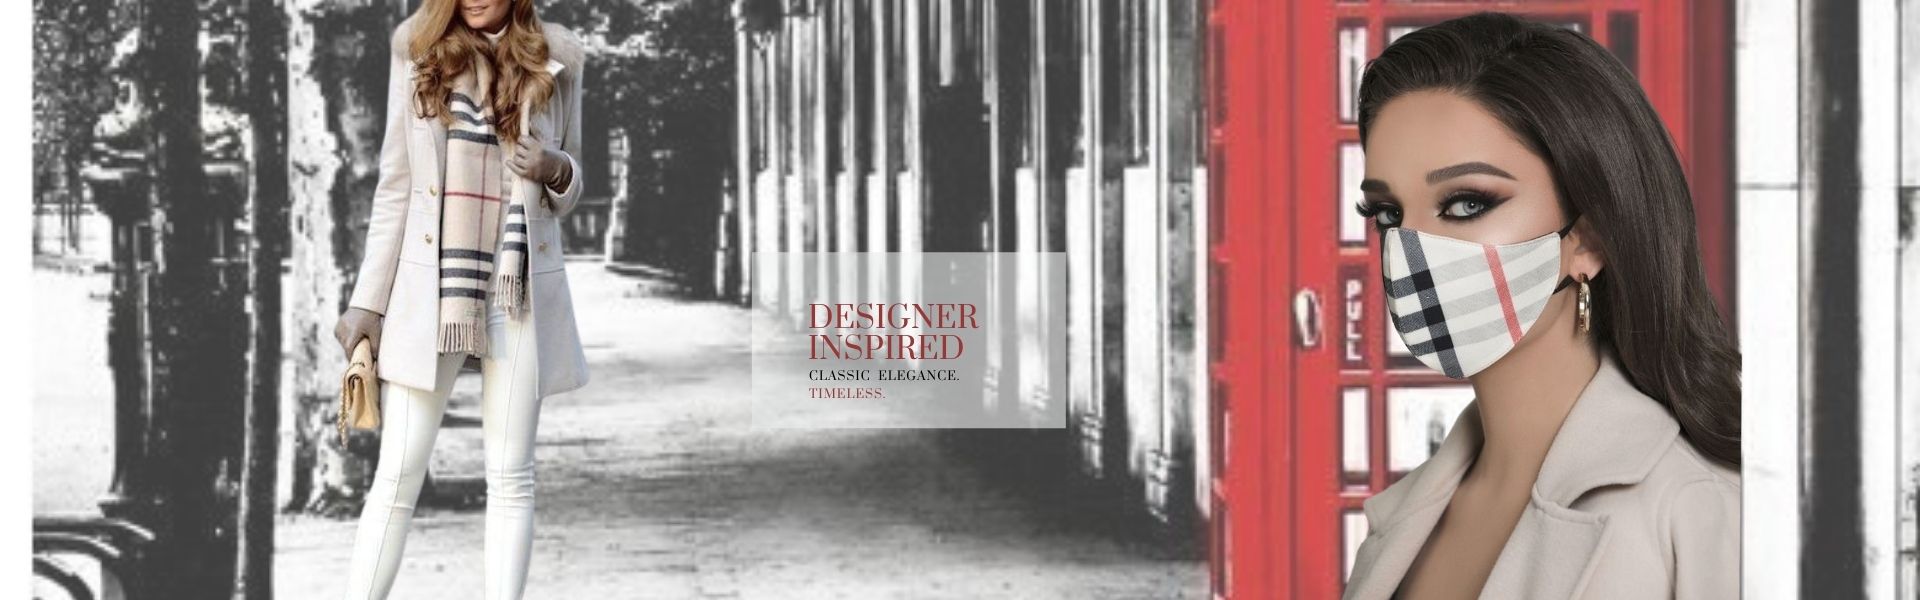 E. Designer Inspired Collection